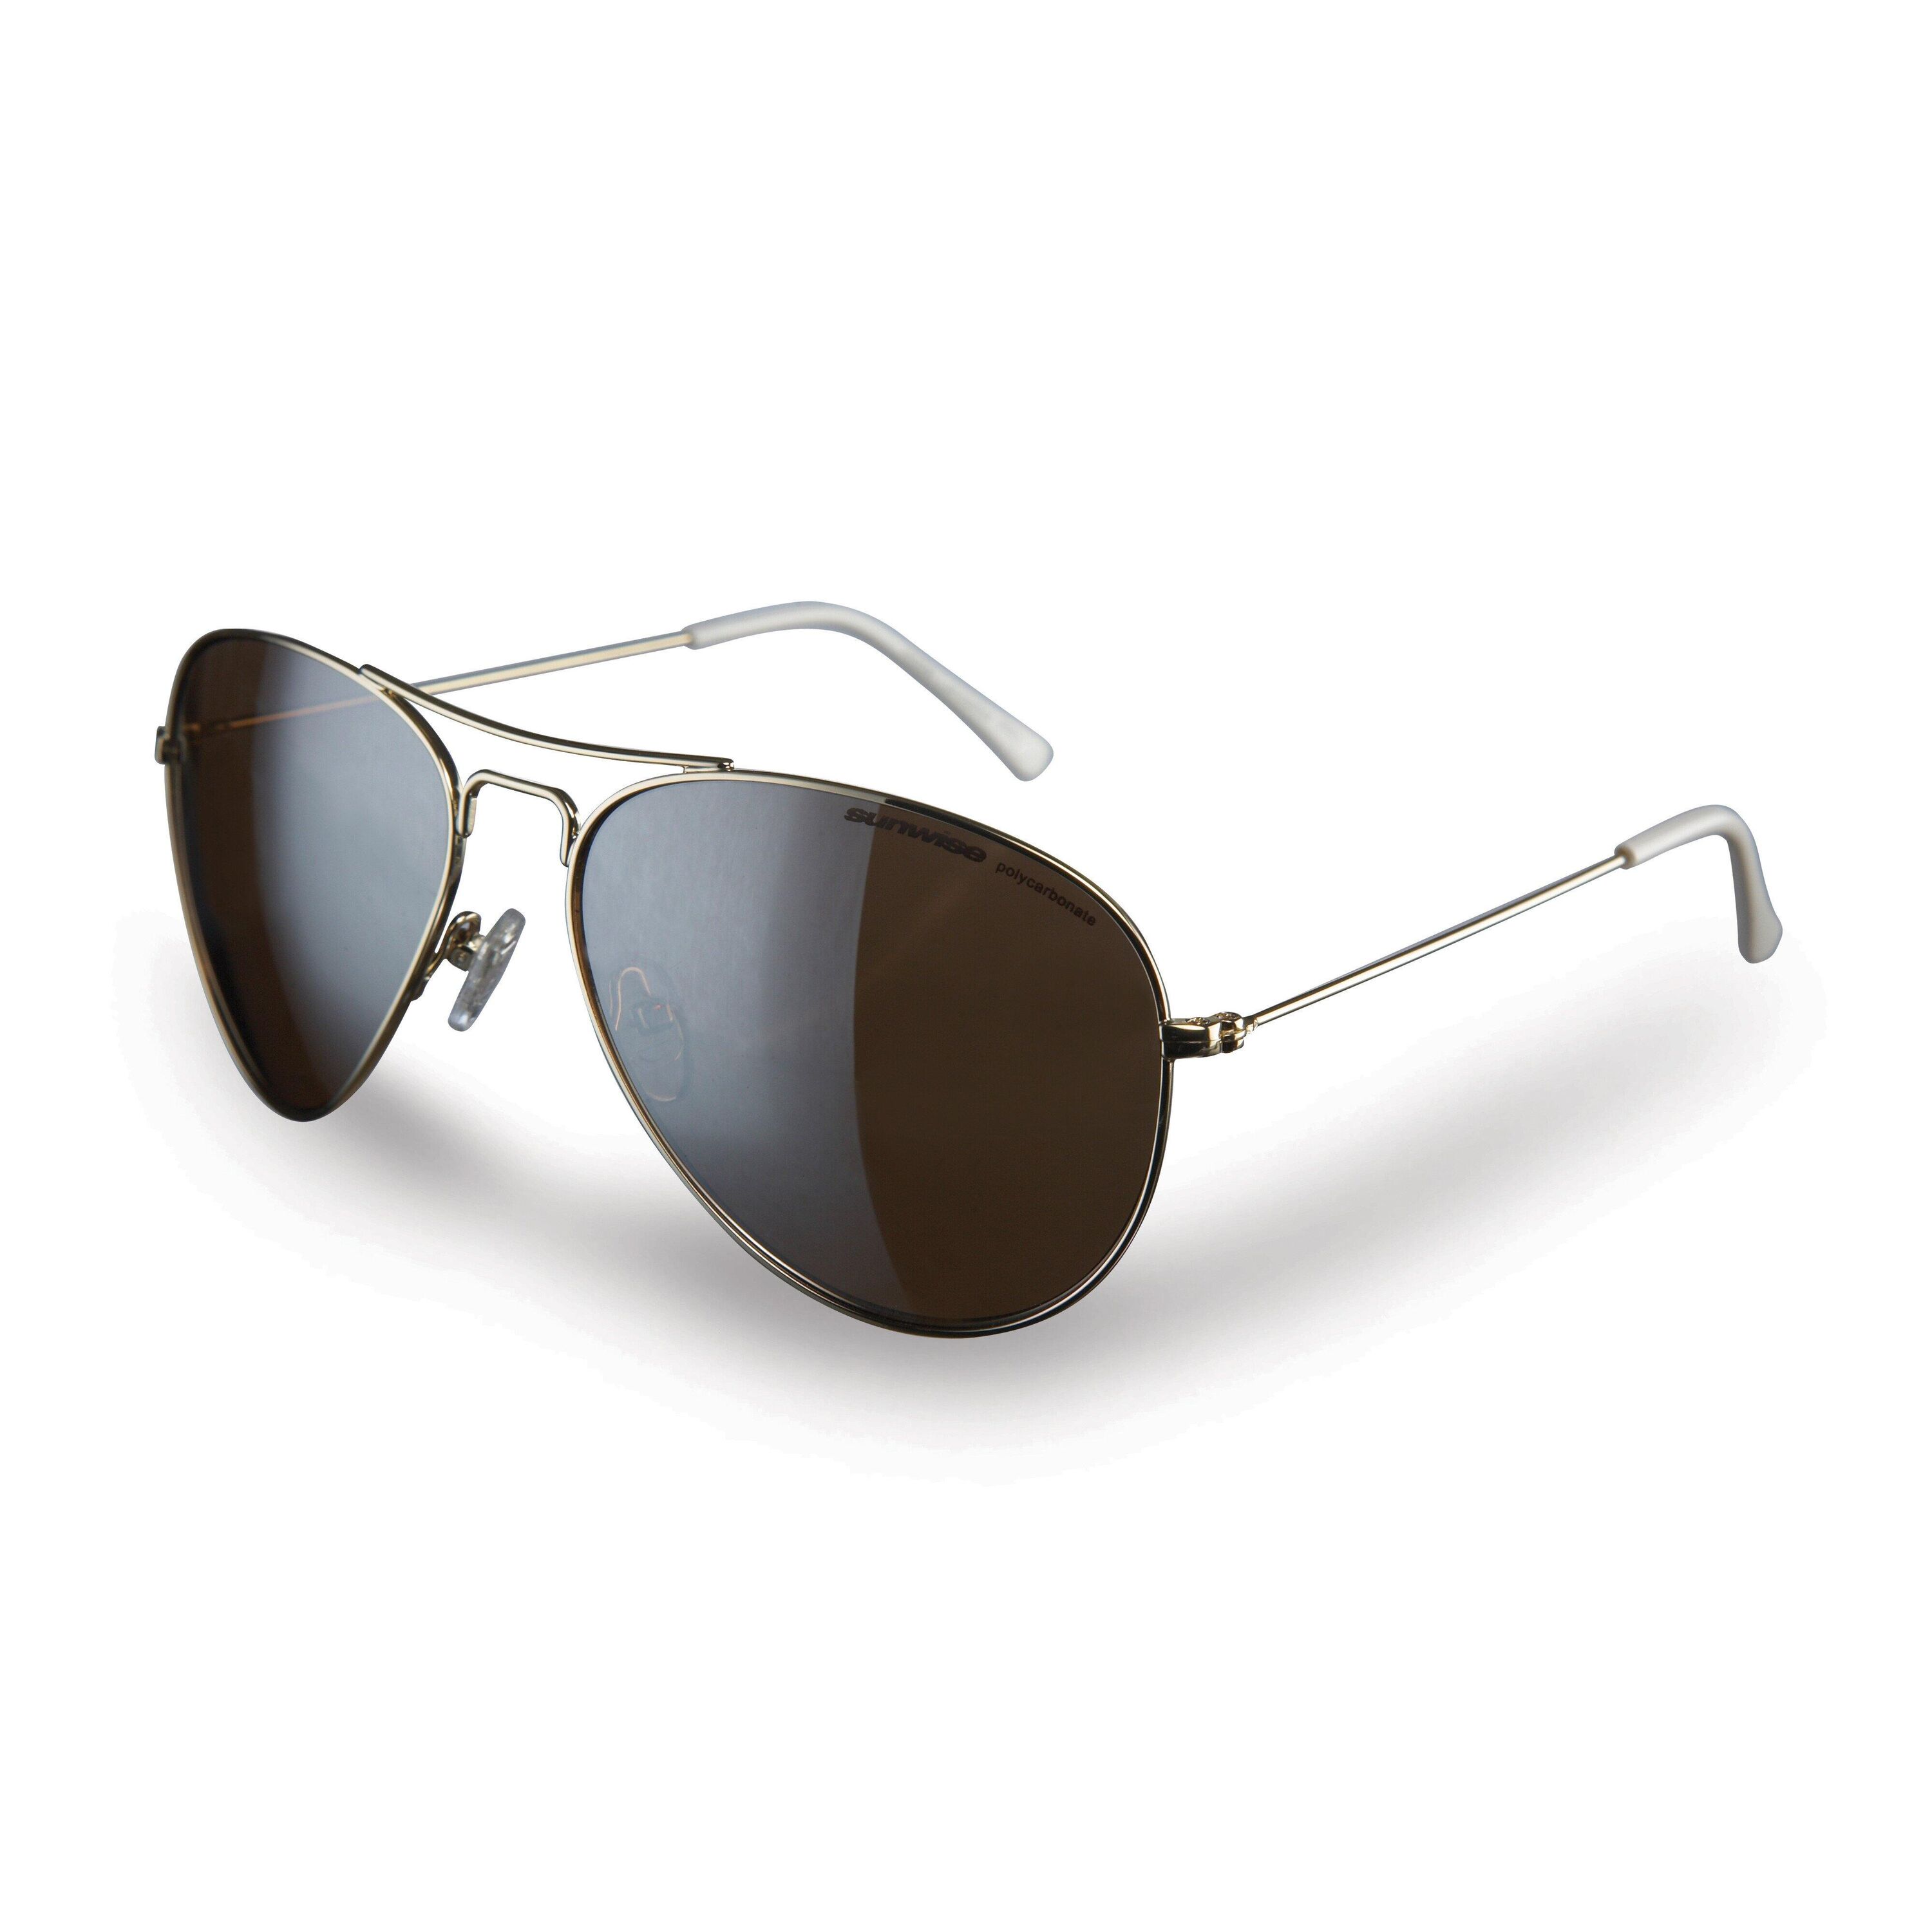 SUNWISE Lancaster PR1 Lifestyle Sunglasses - Category 3